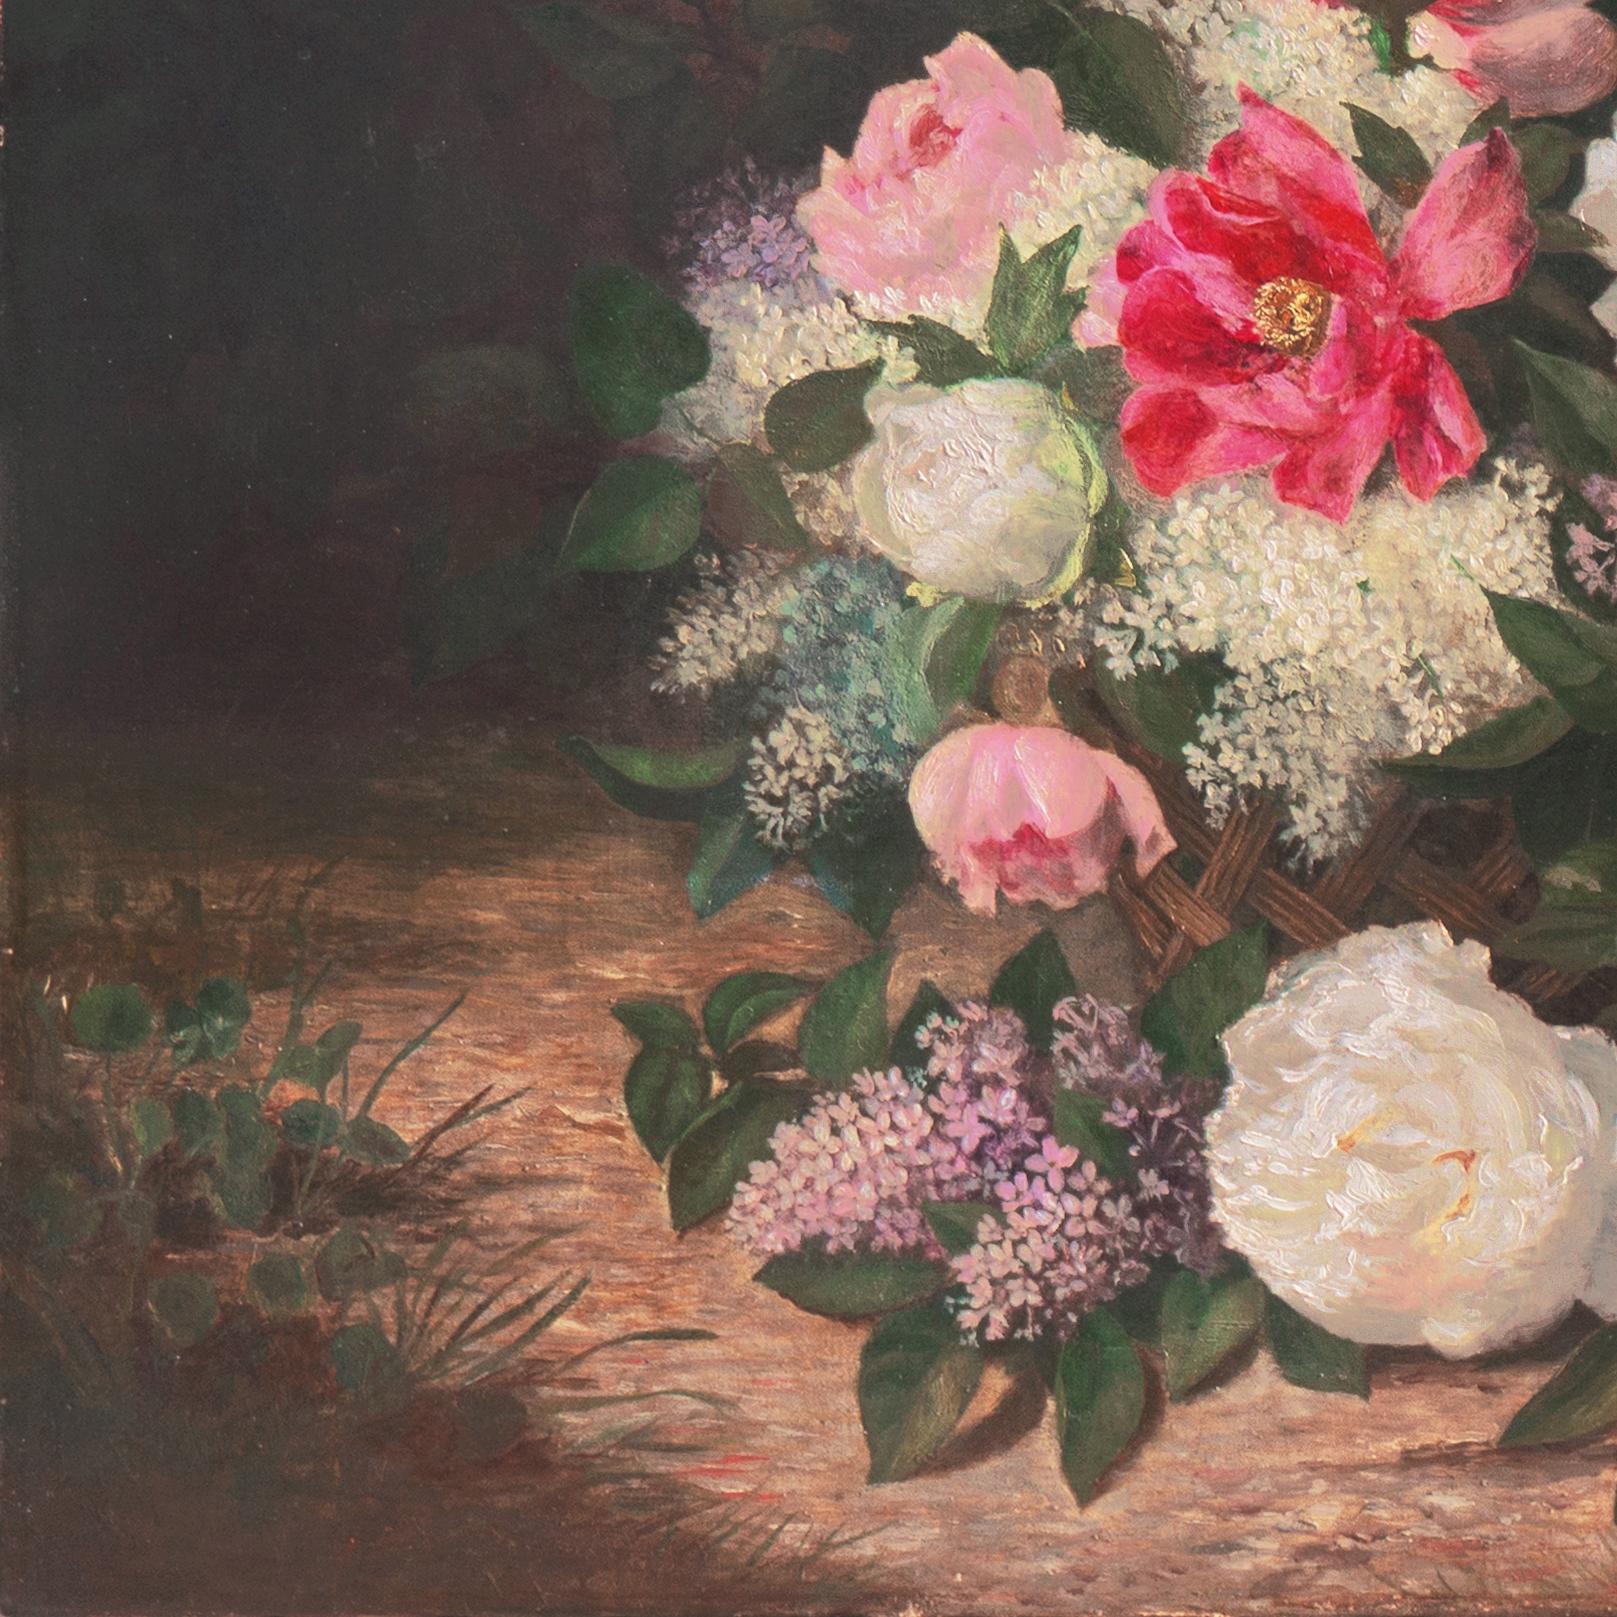 19th century flowers